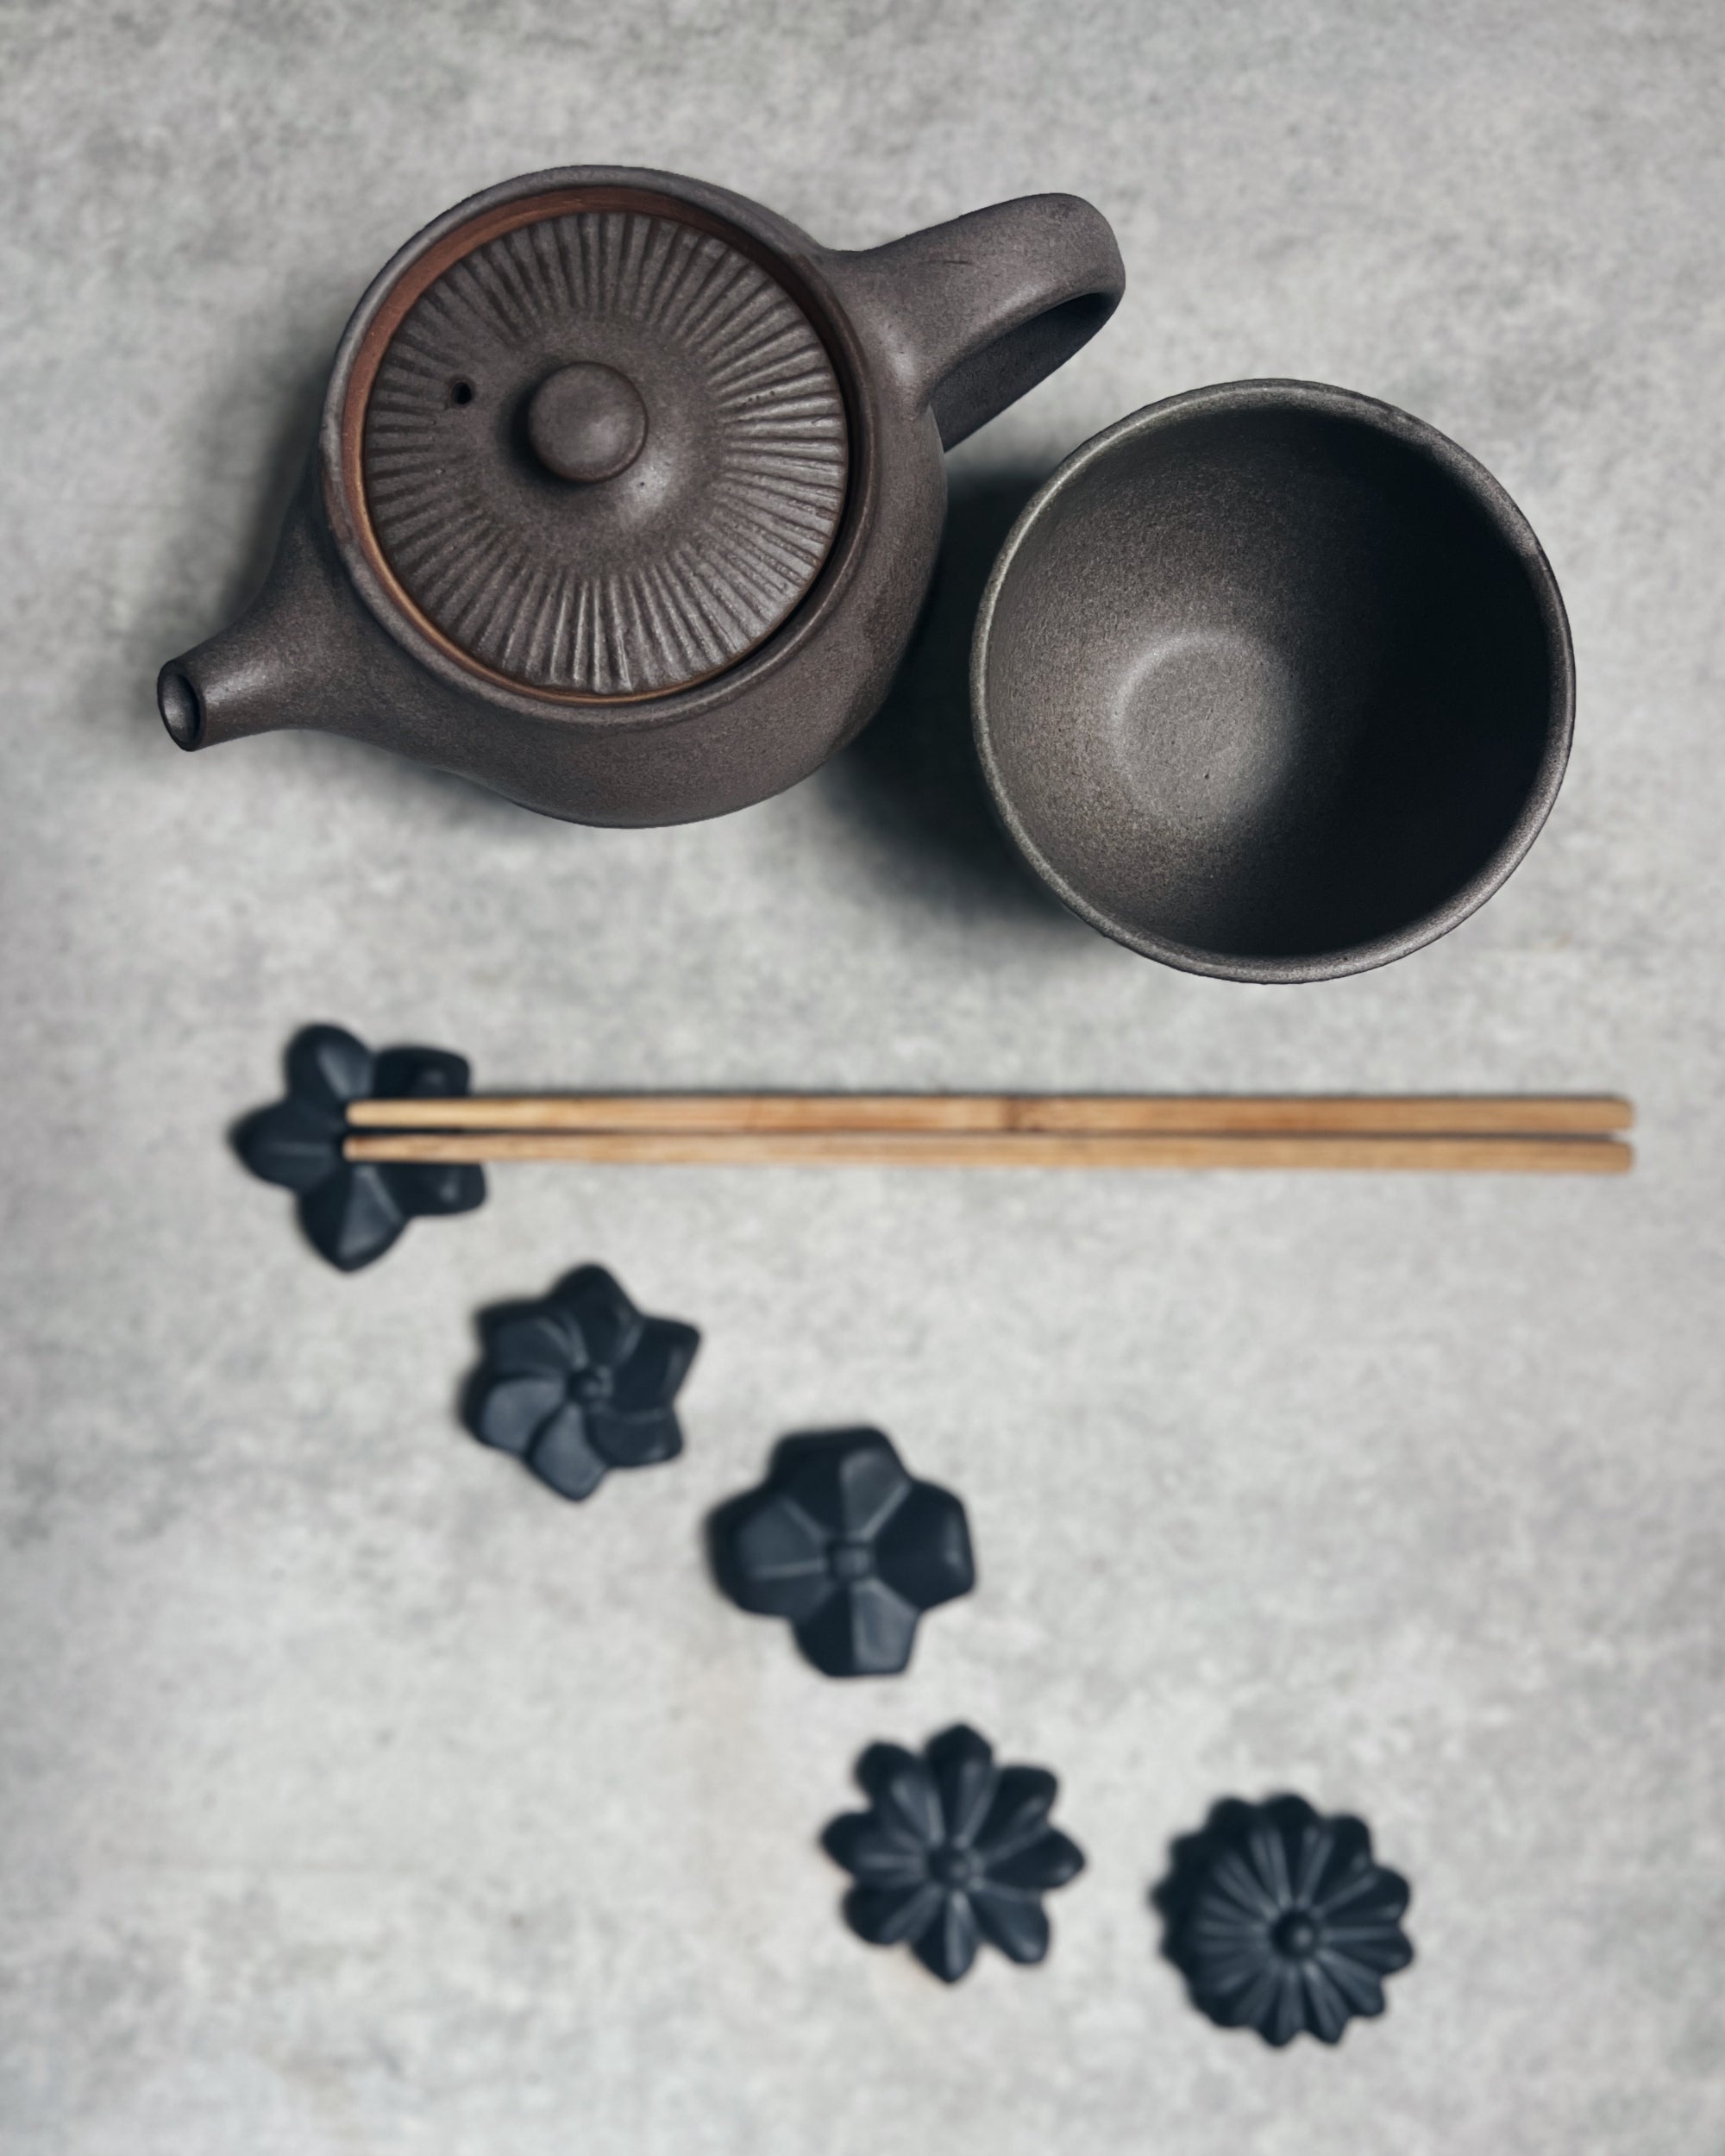 wakasama : ceramic tea pot